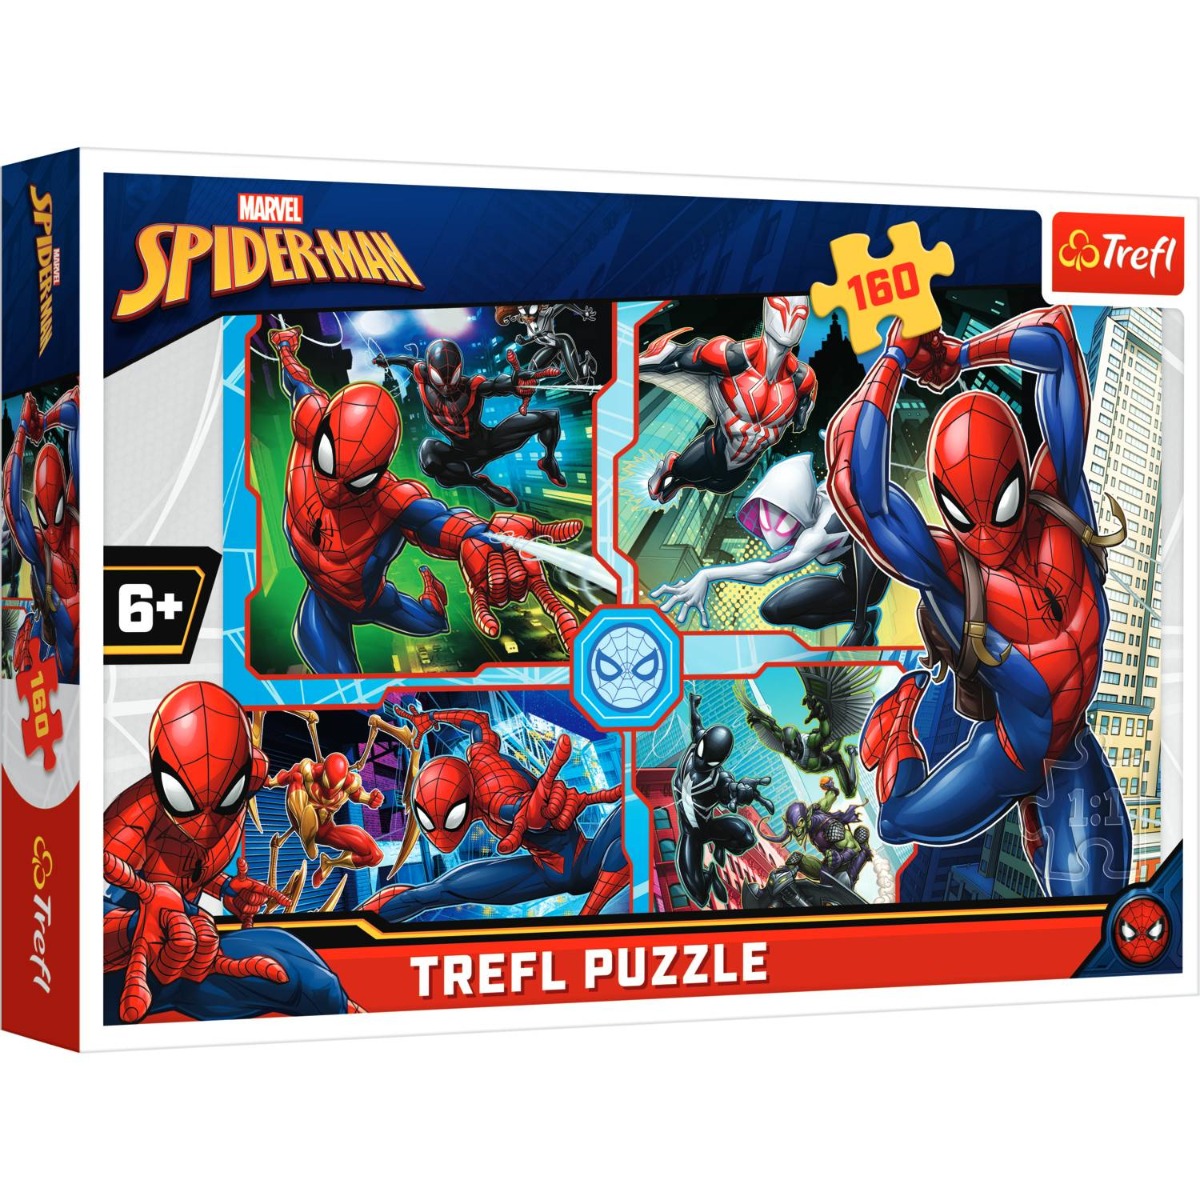 Puzzle Trefl 160 piese, Spiderman salveaza lumea noriel.ro